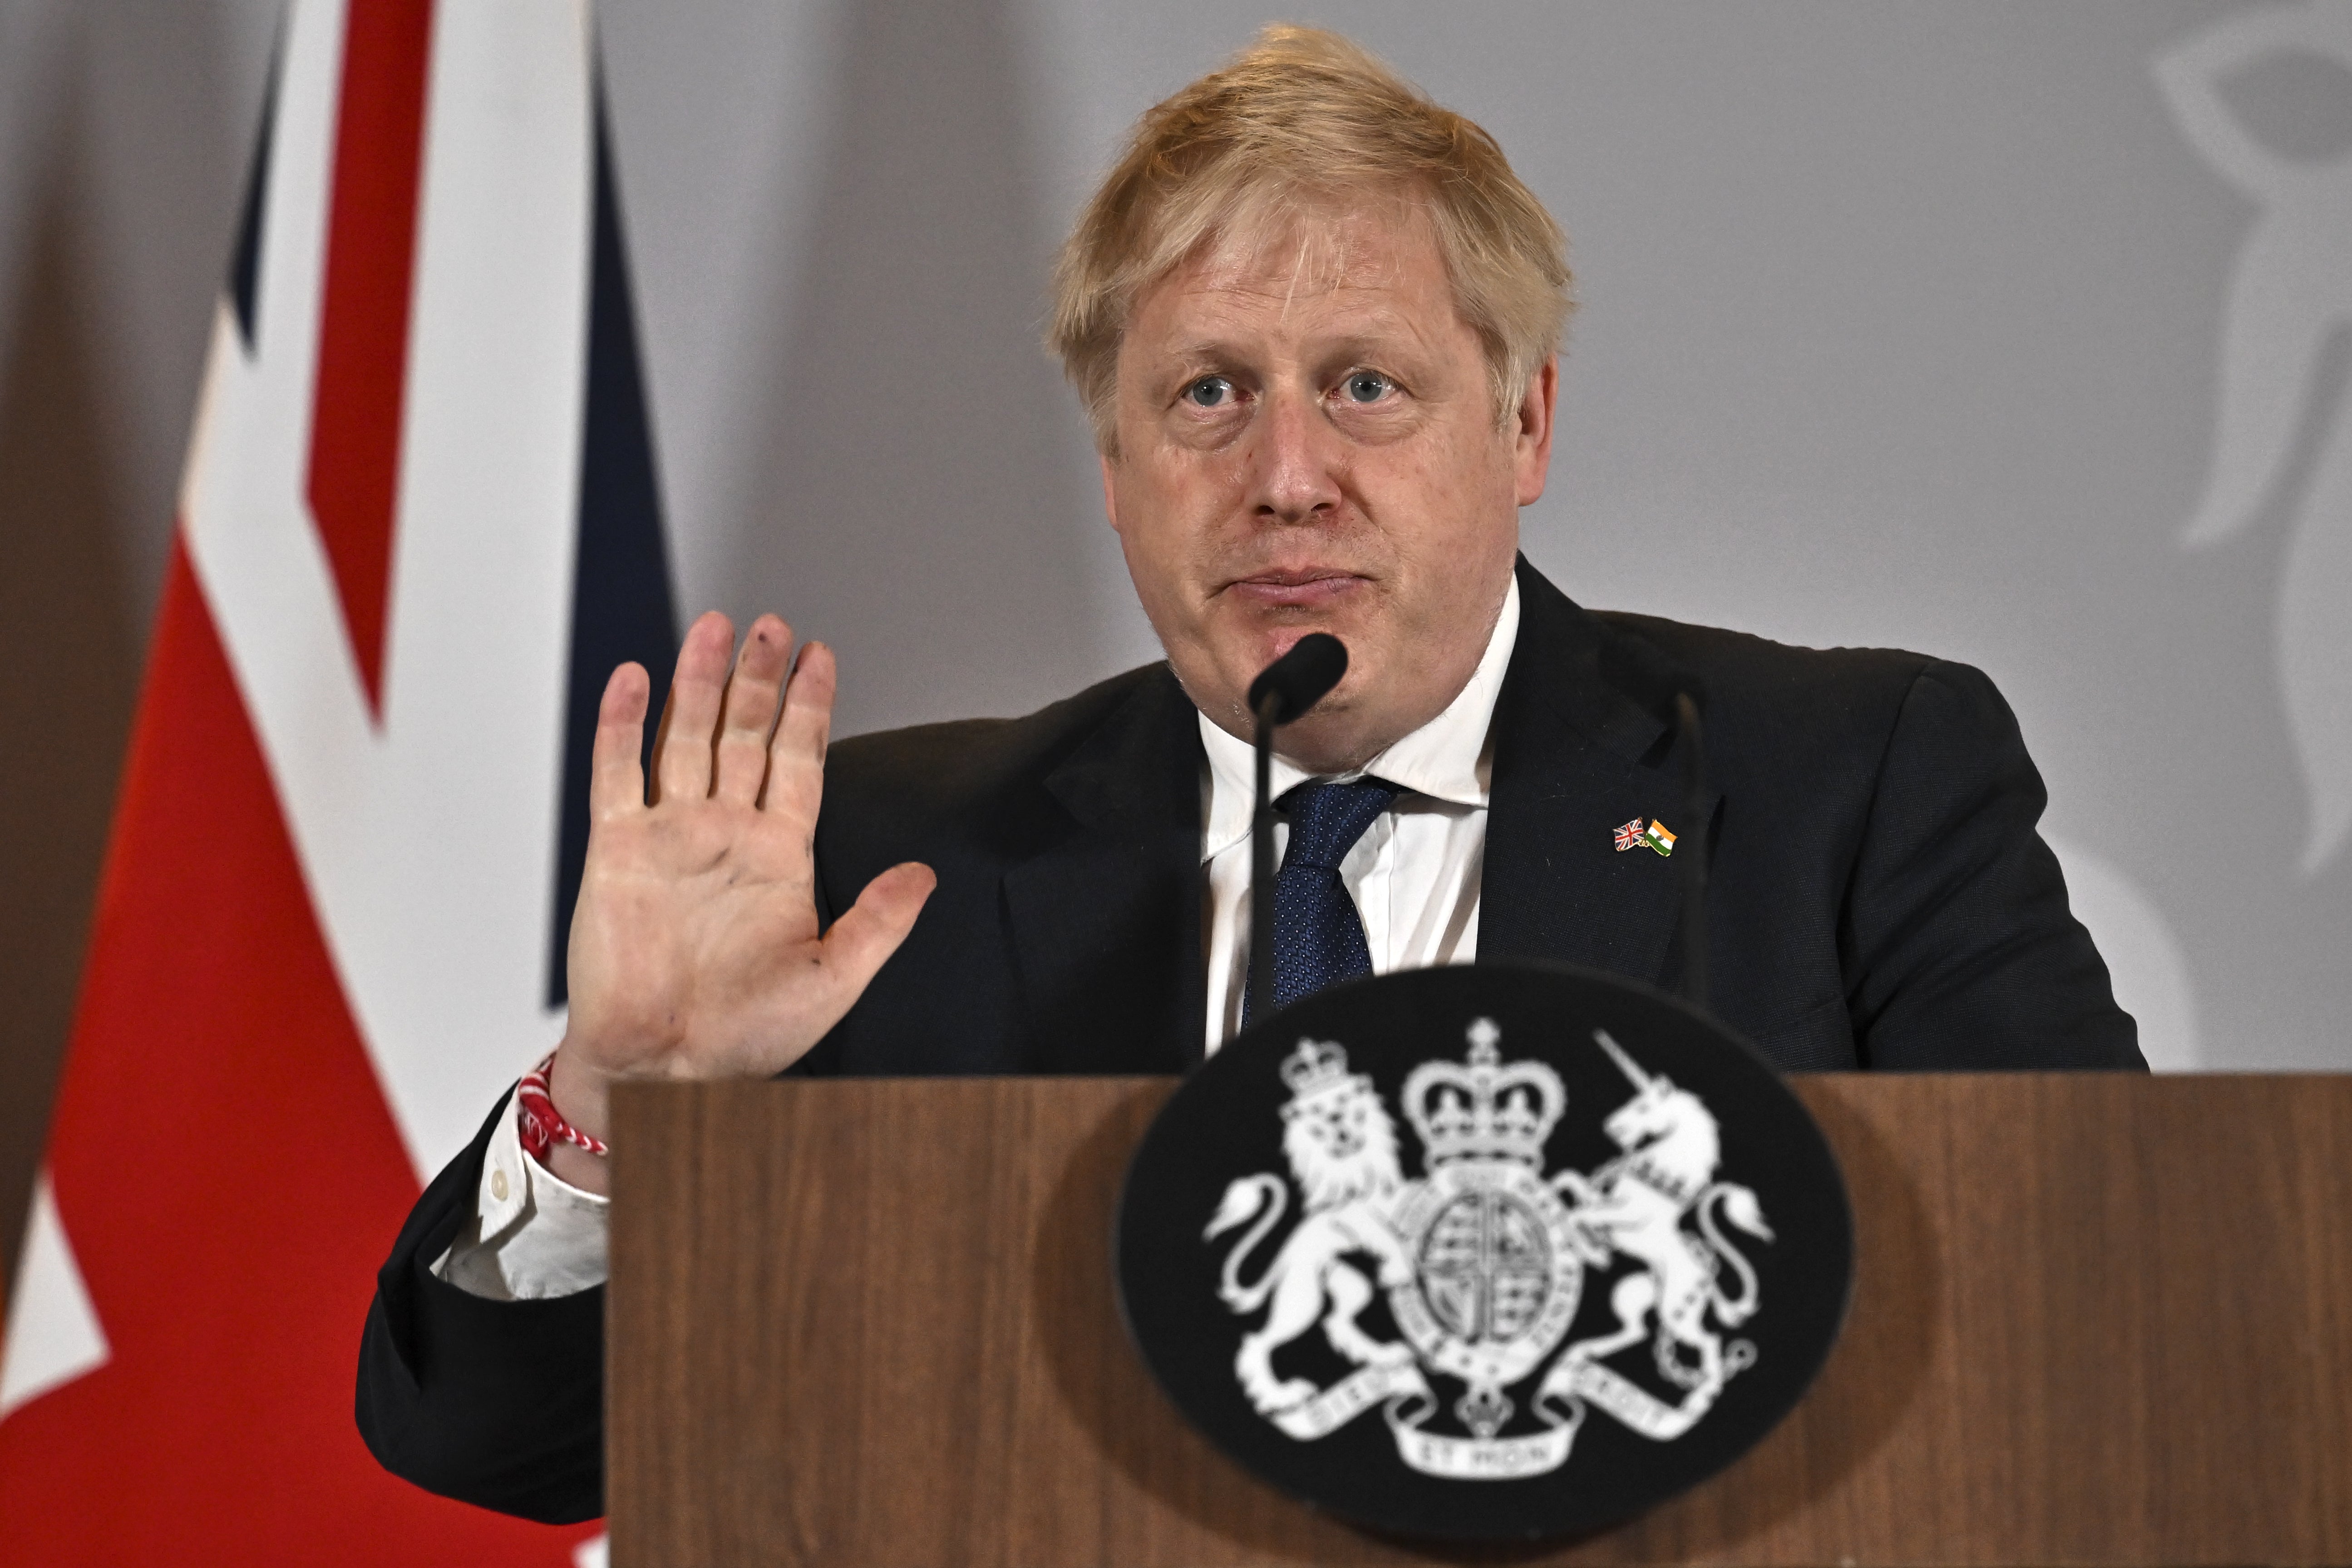 Boris Johnson is ‘unfit to govern’, the Labour MP said (Ben Stansall/PA)